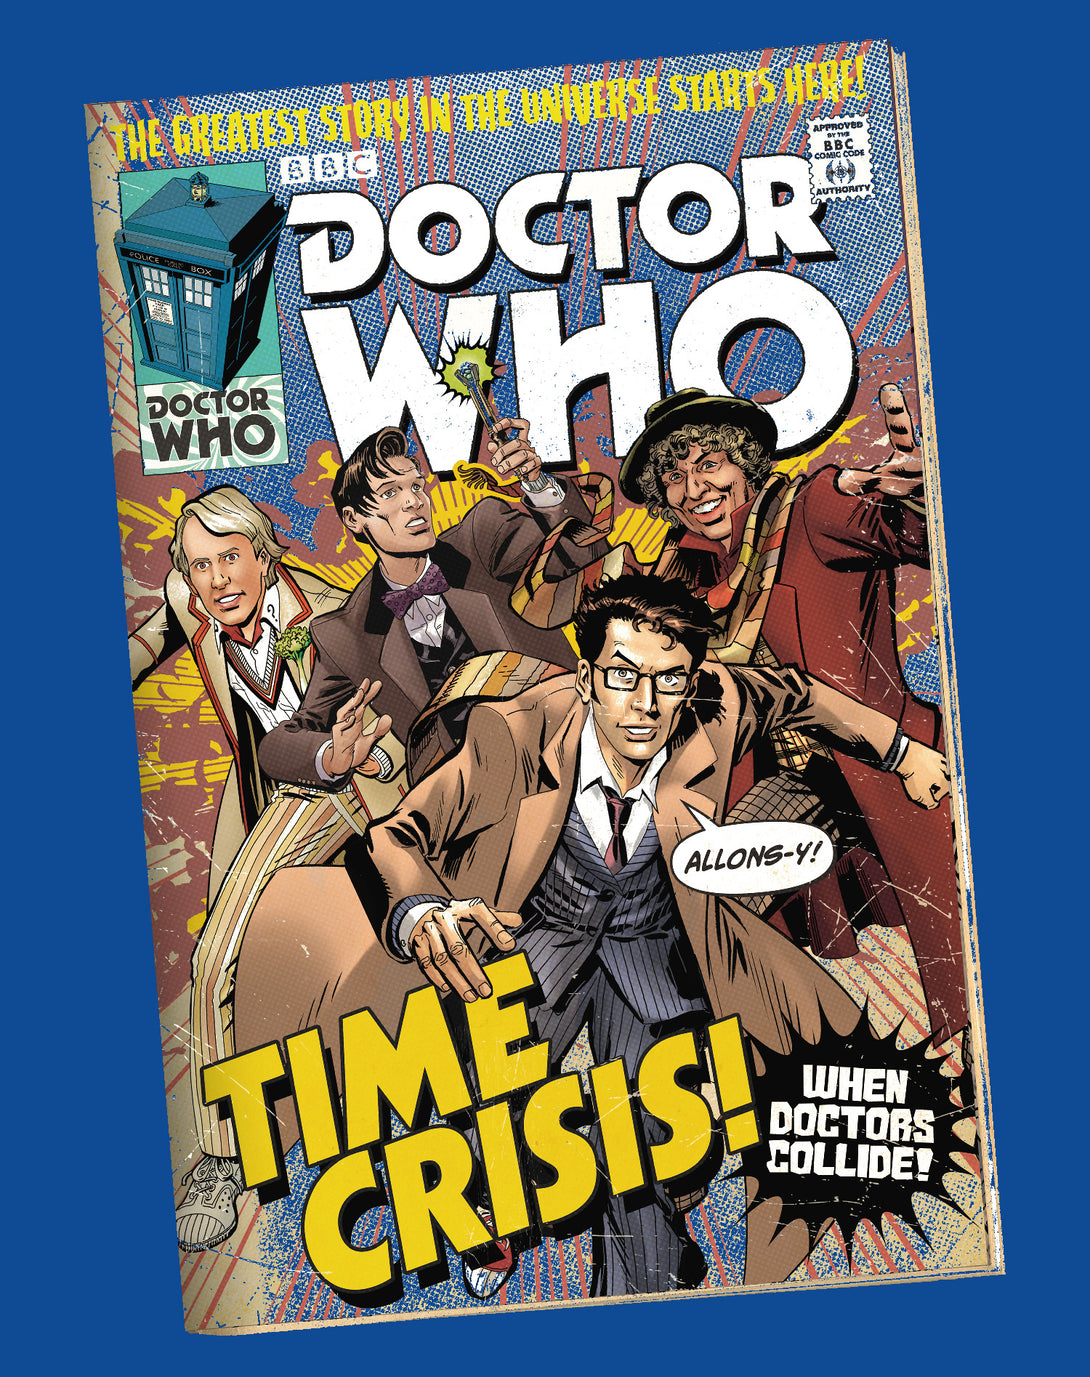 Doctor Who Comic Time Crisis Official Men's T-shirt Blue - Urban Species Design Close Up